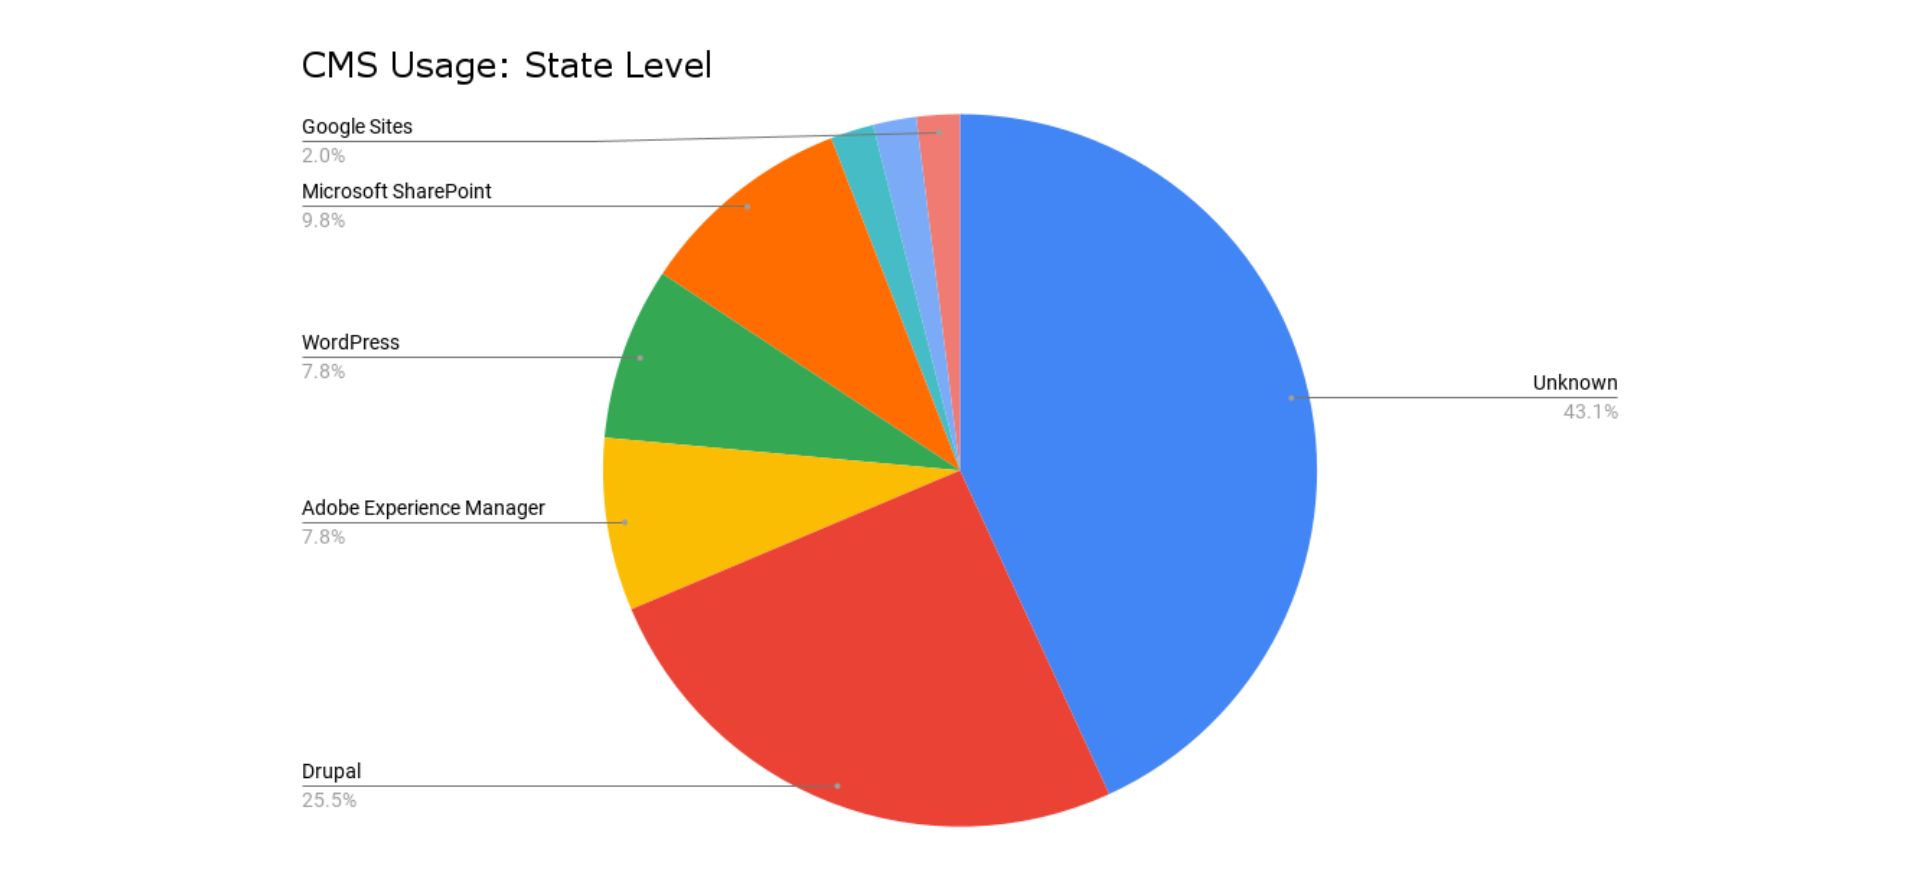 CMS usage: State level